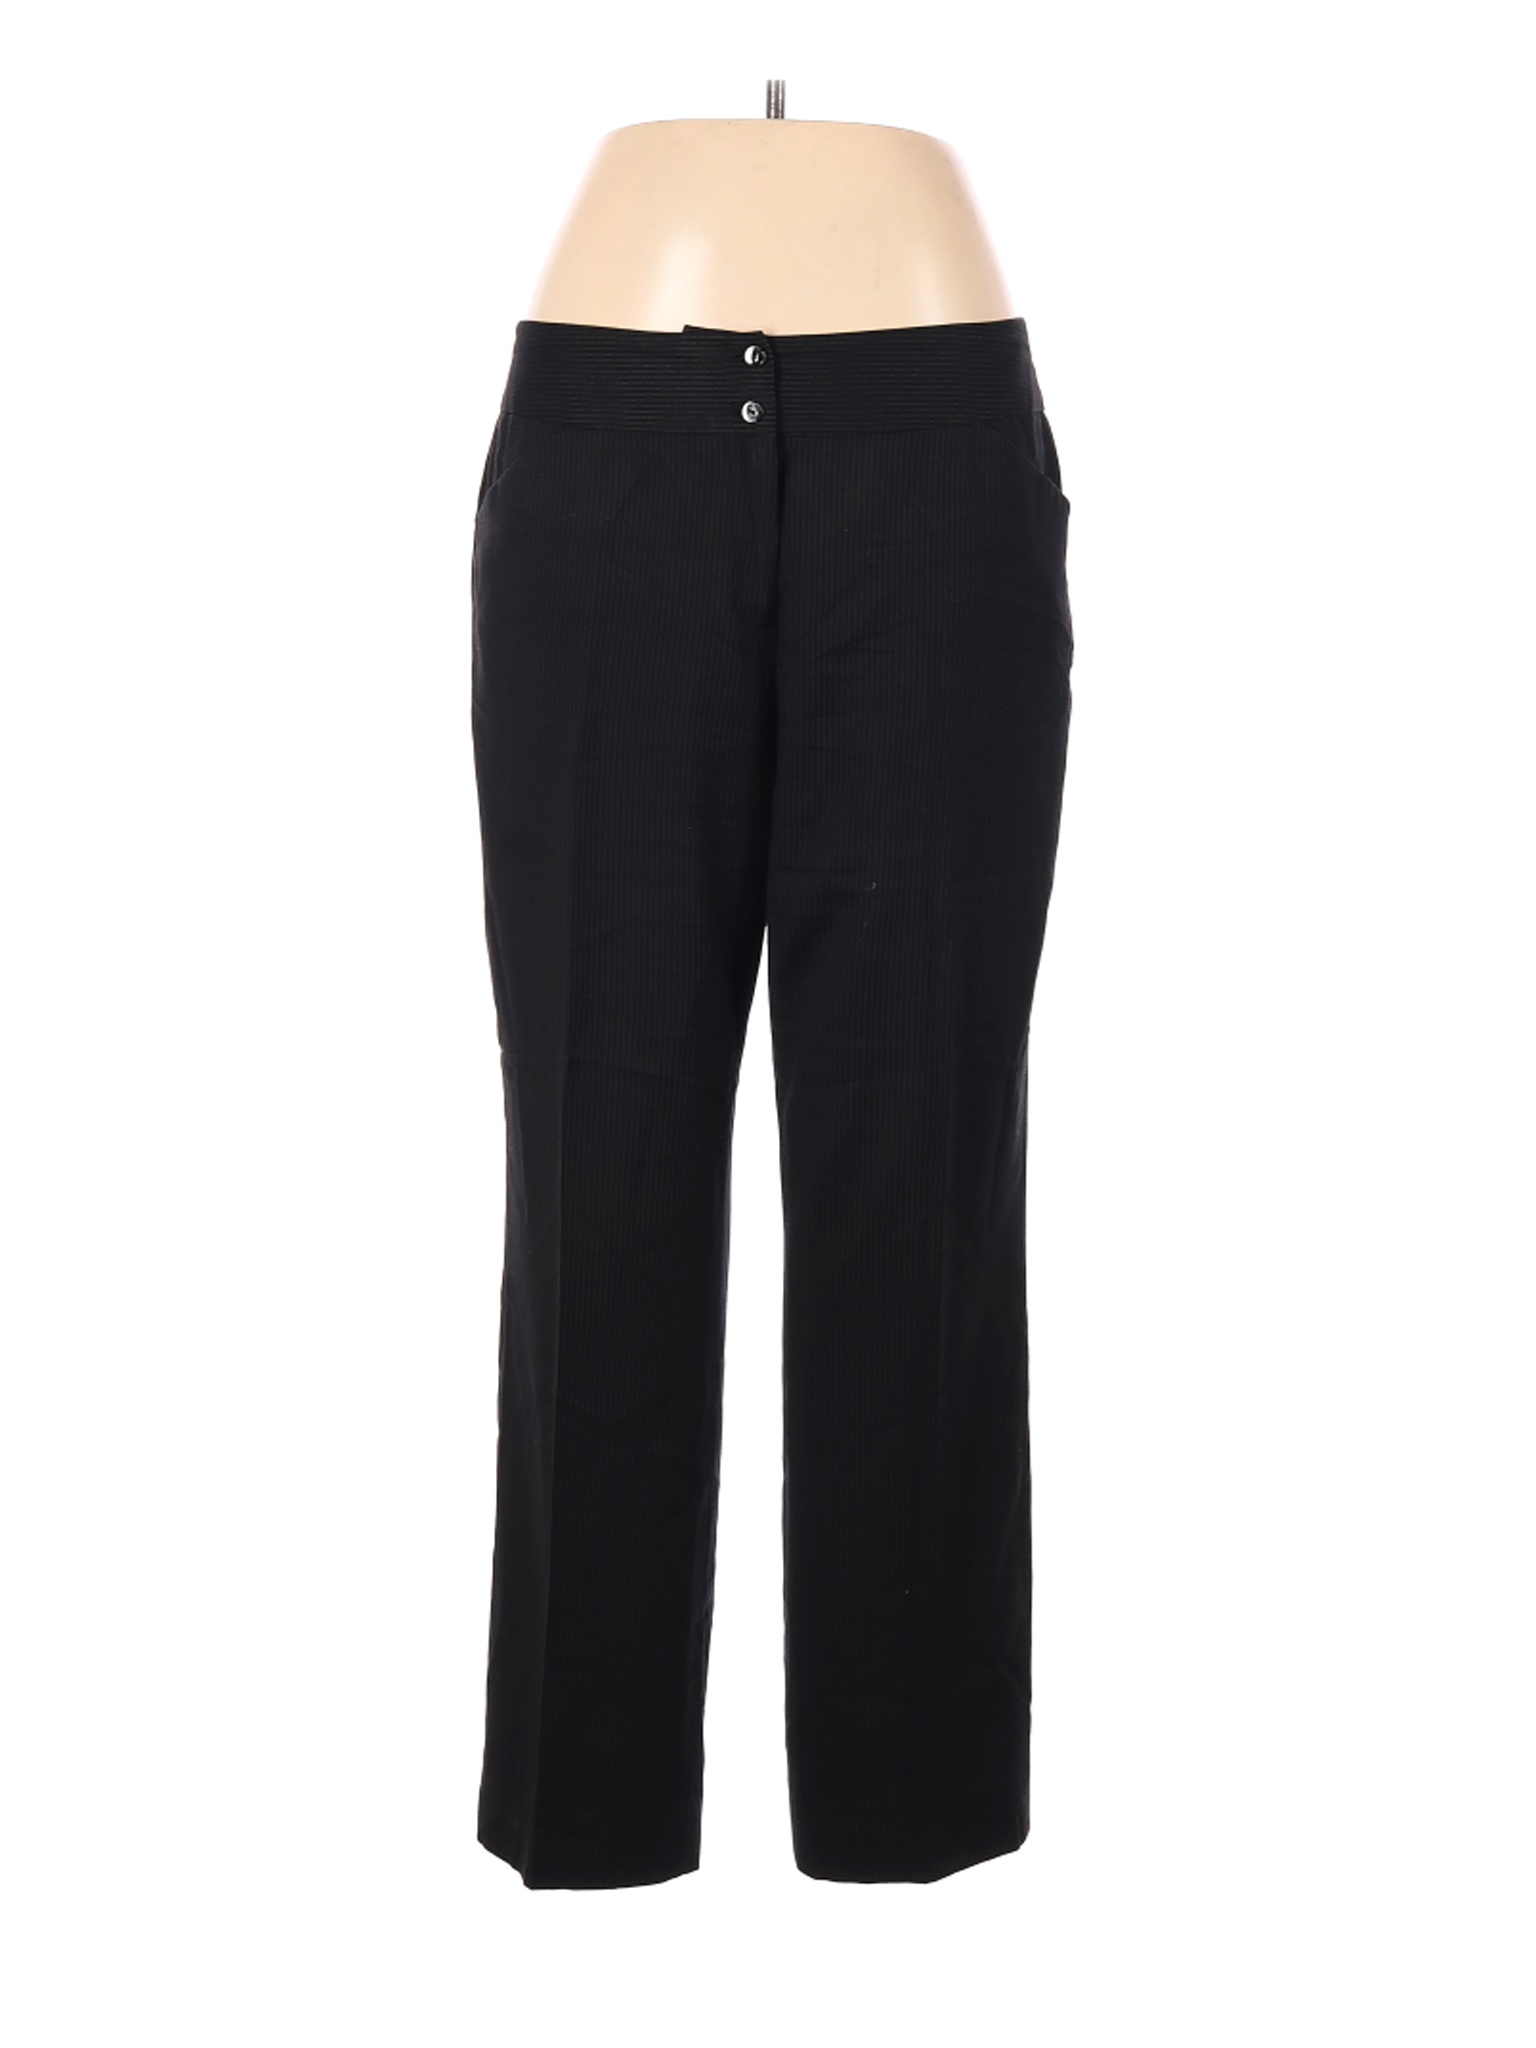 Tahari Women Black Dress Pants 12 Petites | eBay